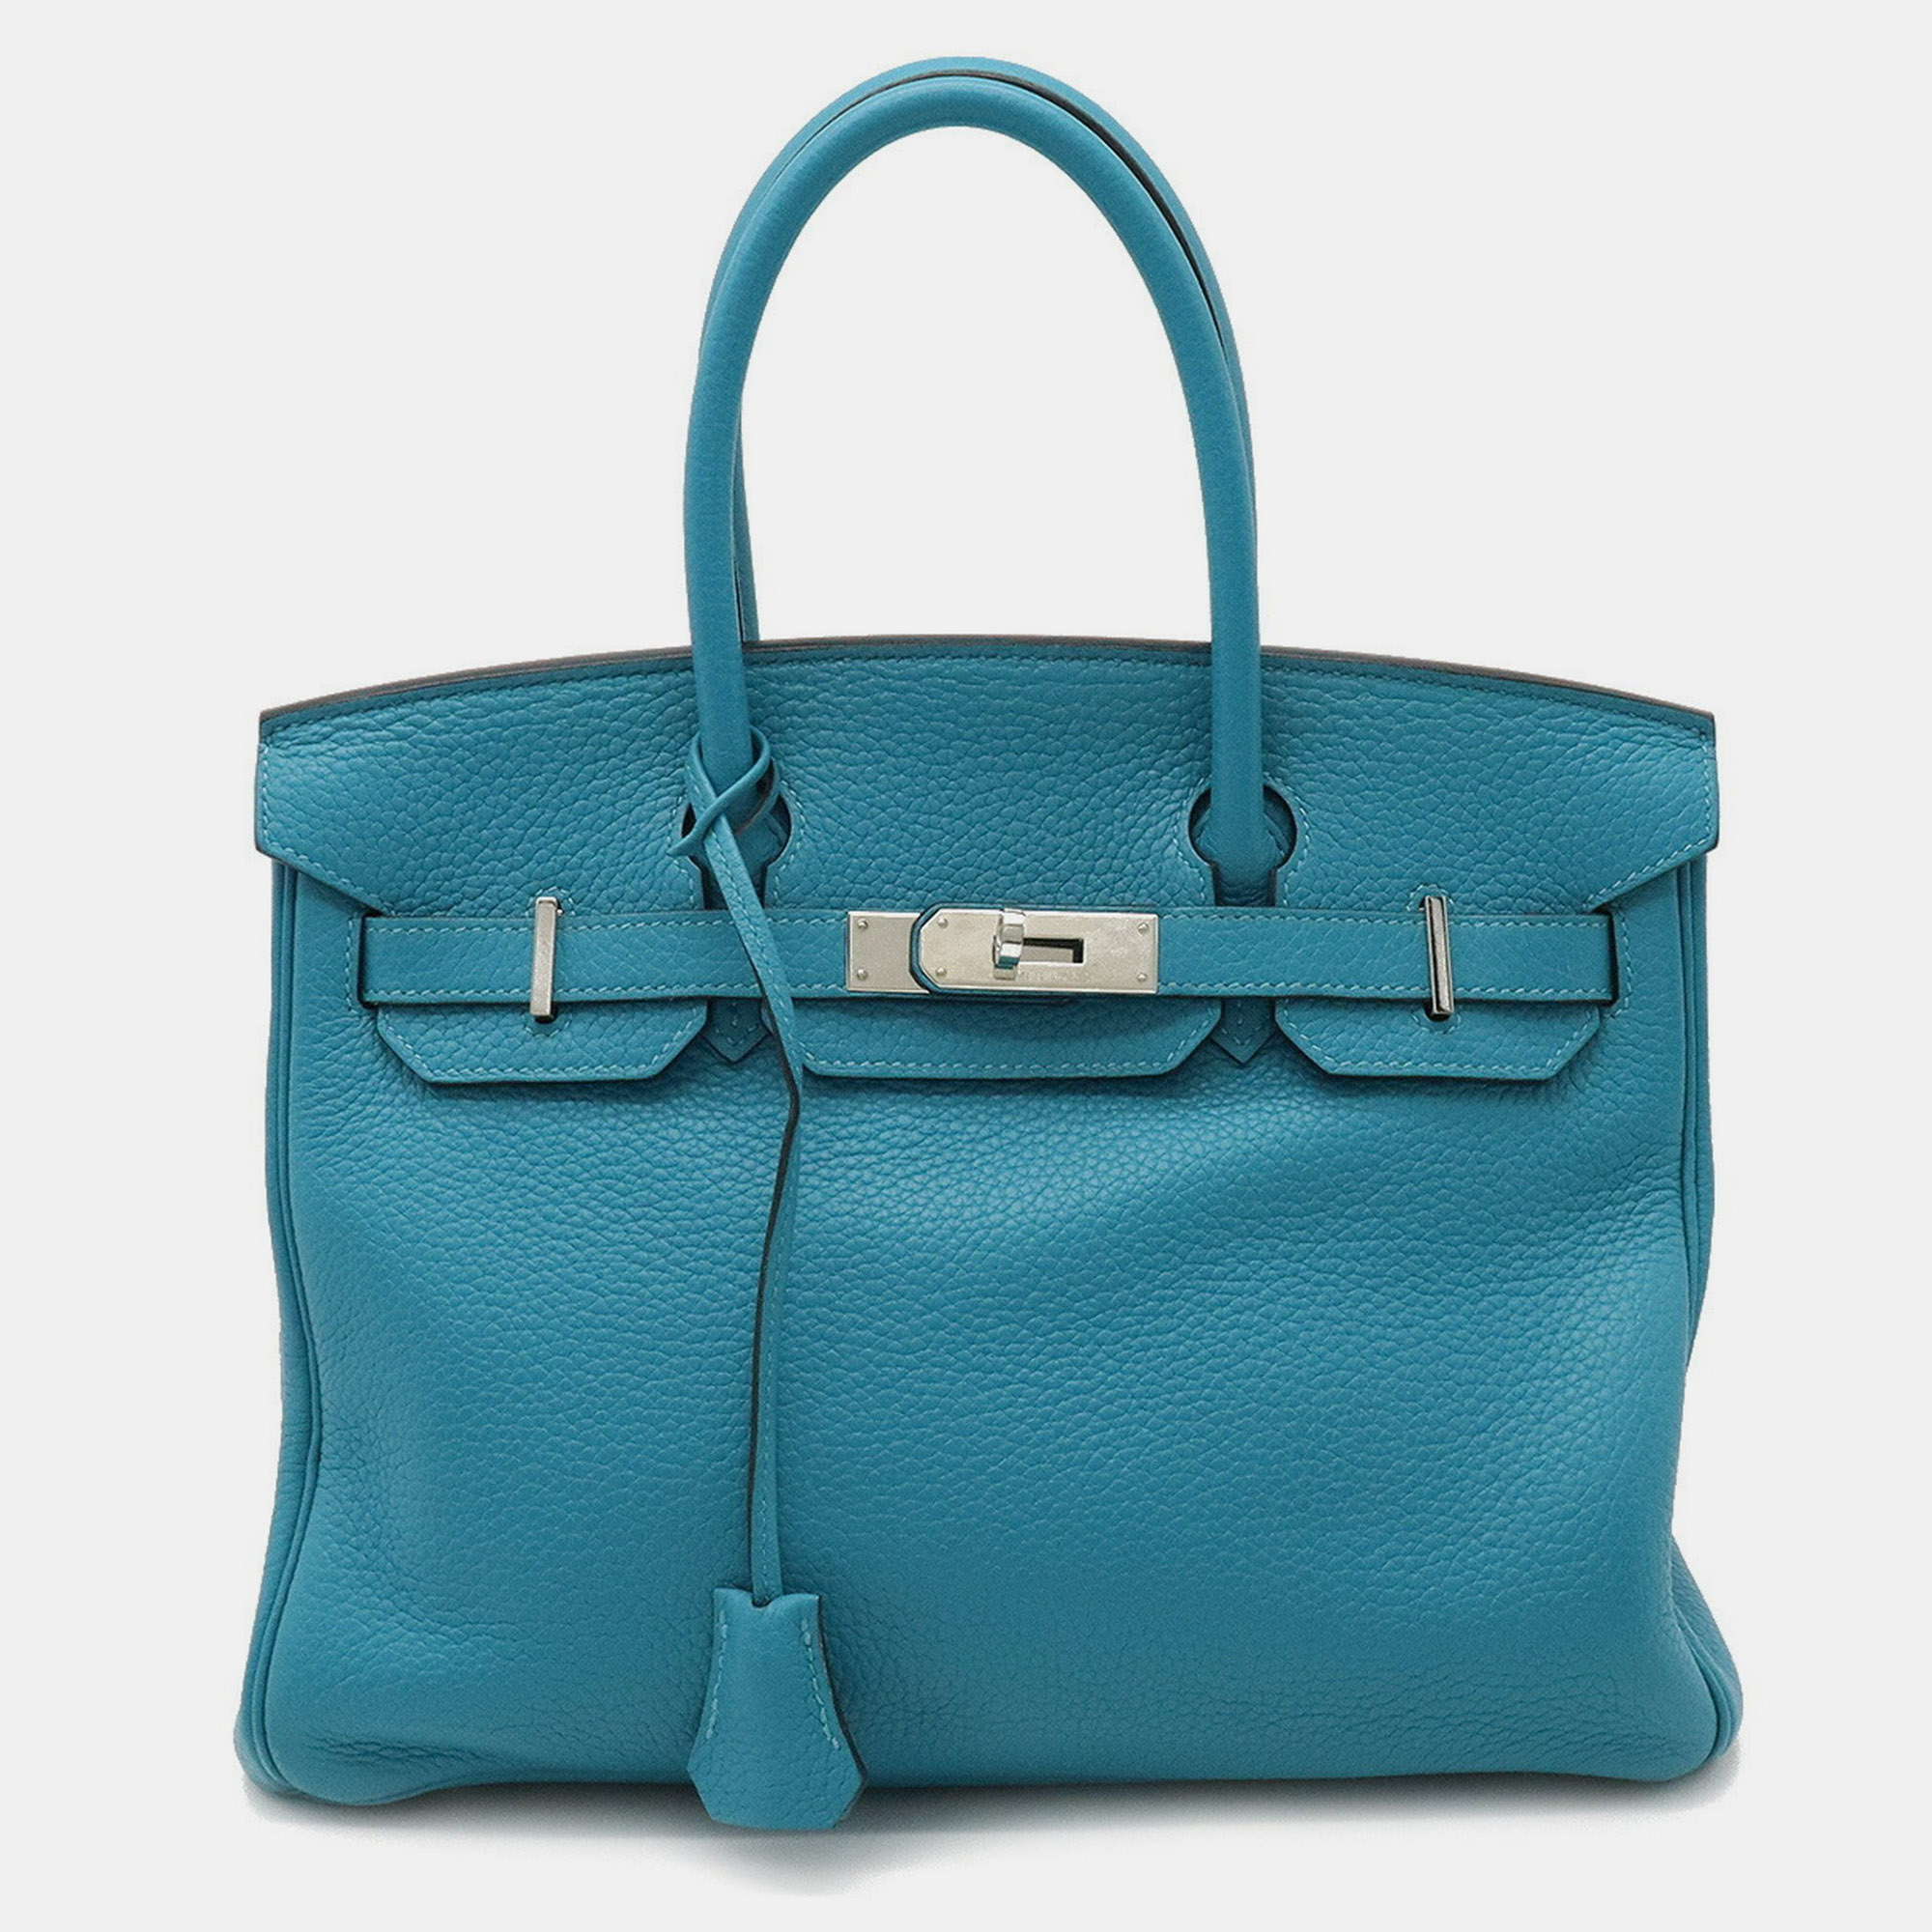 HERMES Birkin 30 Handbag Taurillon Leather Turquoise Blue Y Stamp